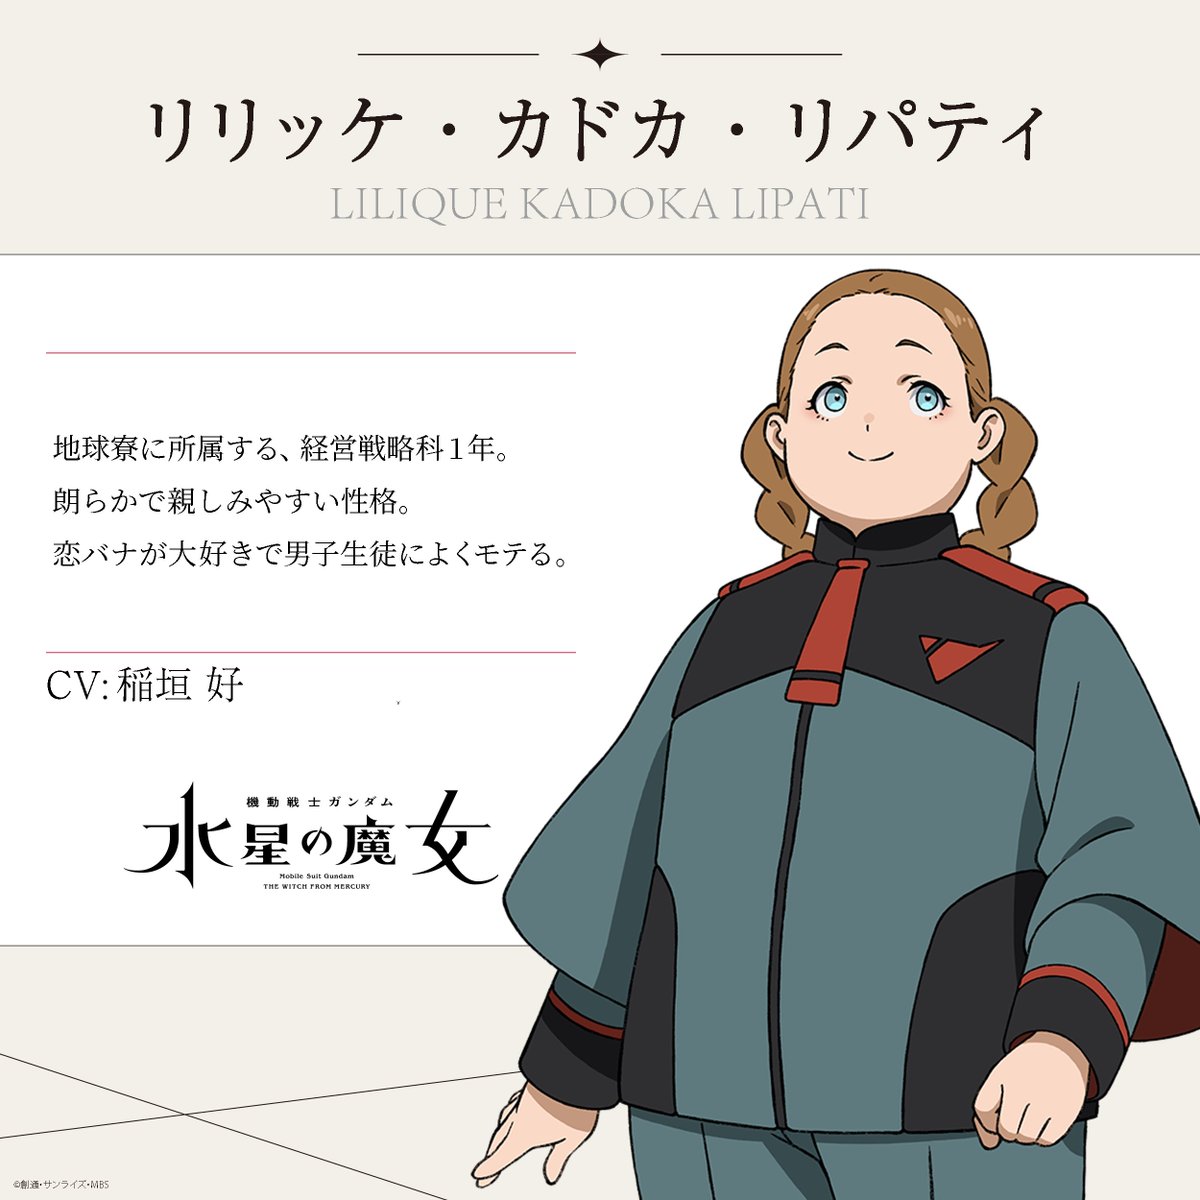 Konomi Inagaki as Lilique Kadoka Lipati in Mobile Suit Gundam: The Witch from Mercury